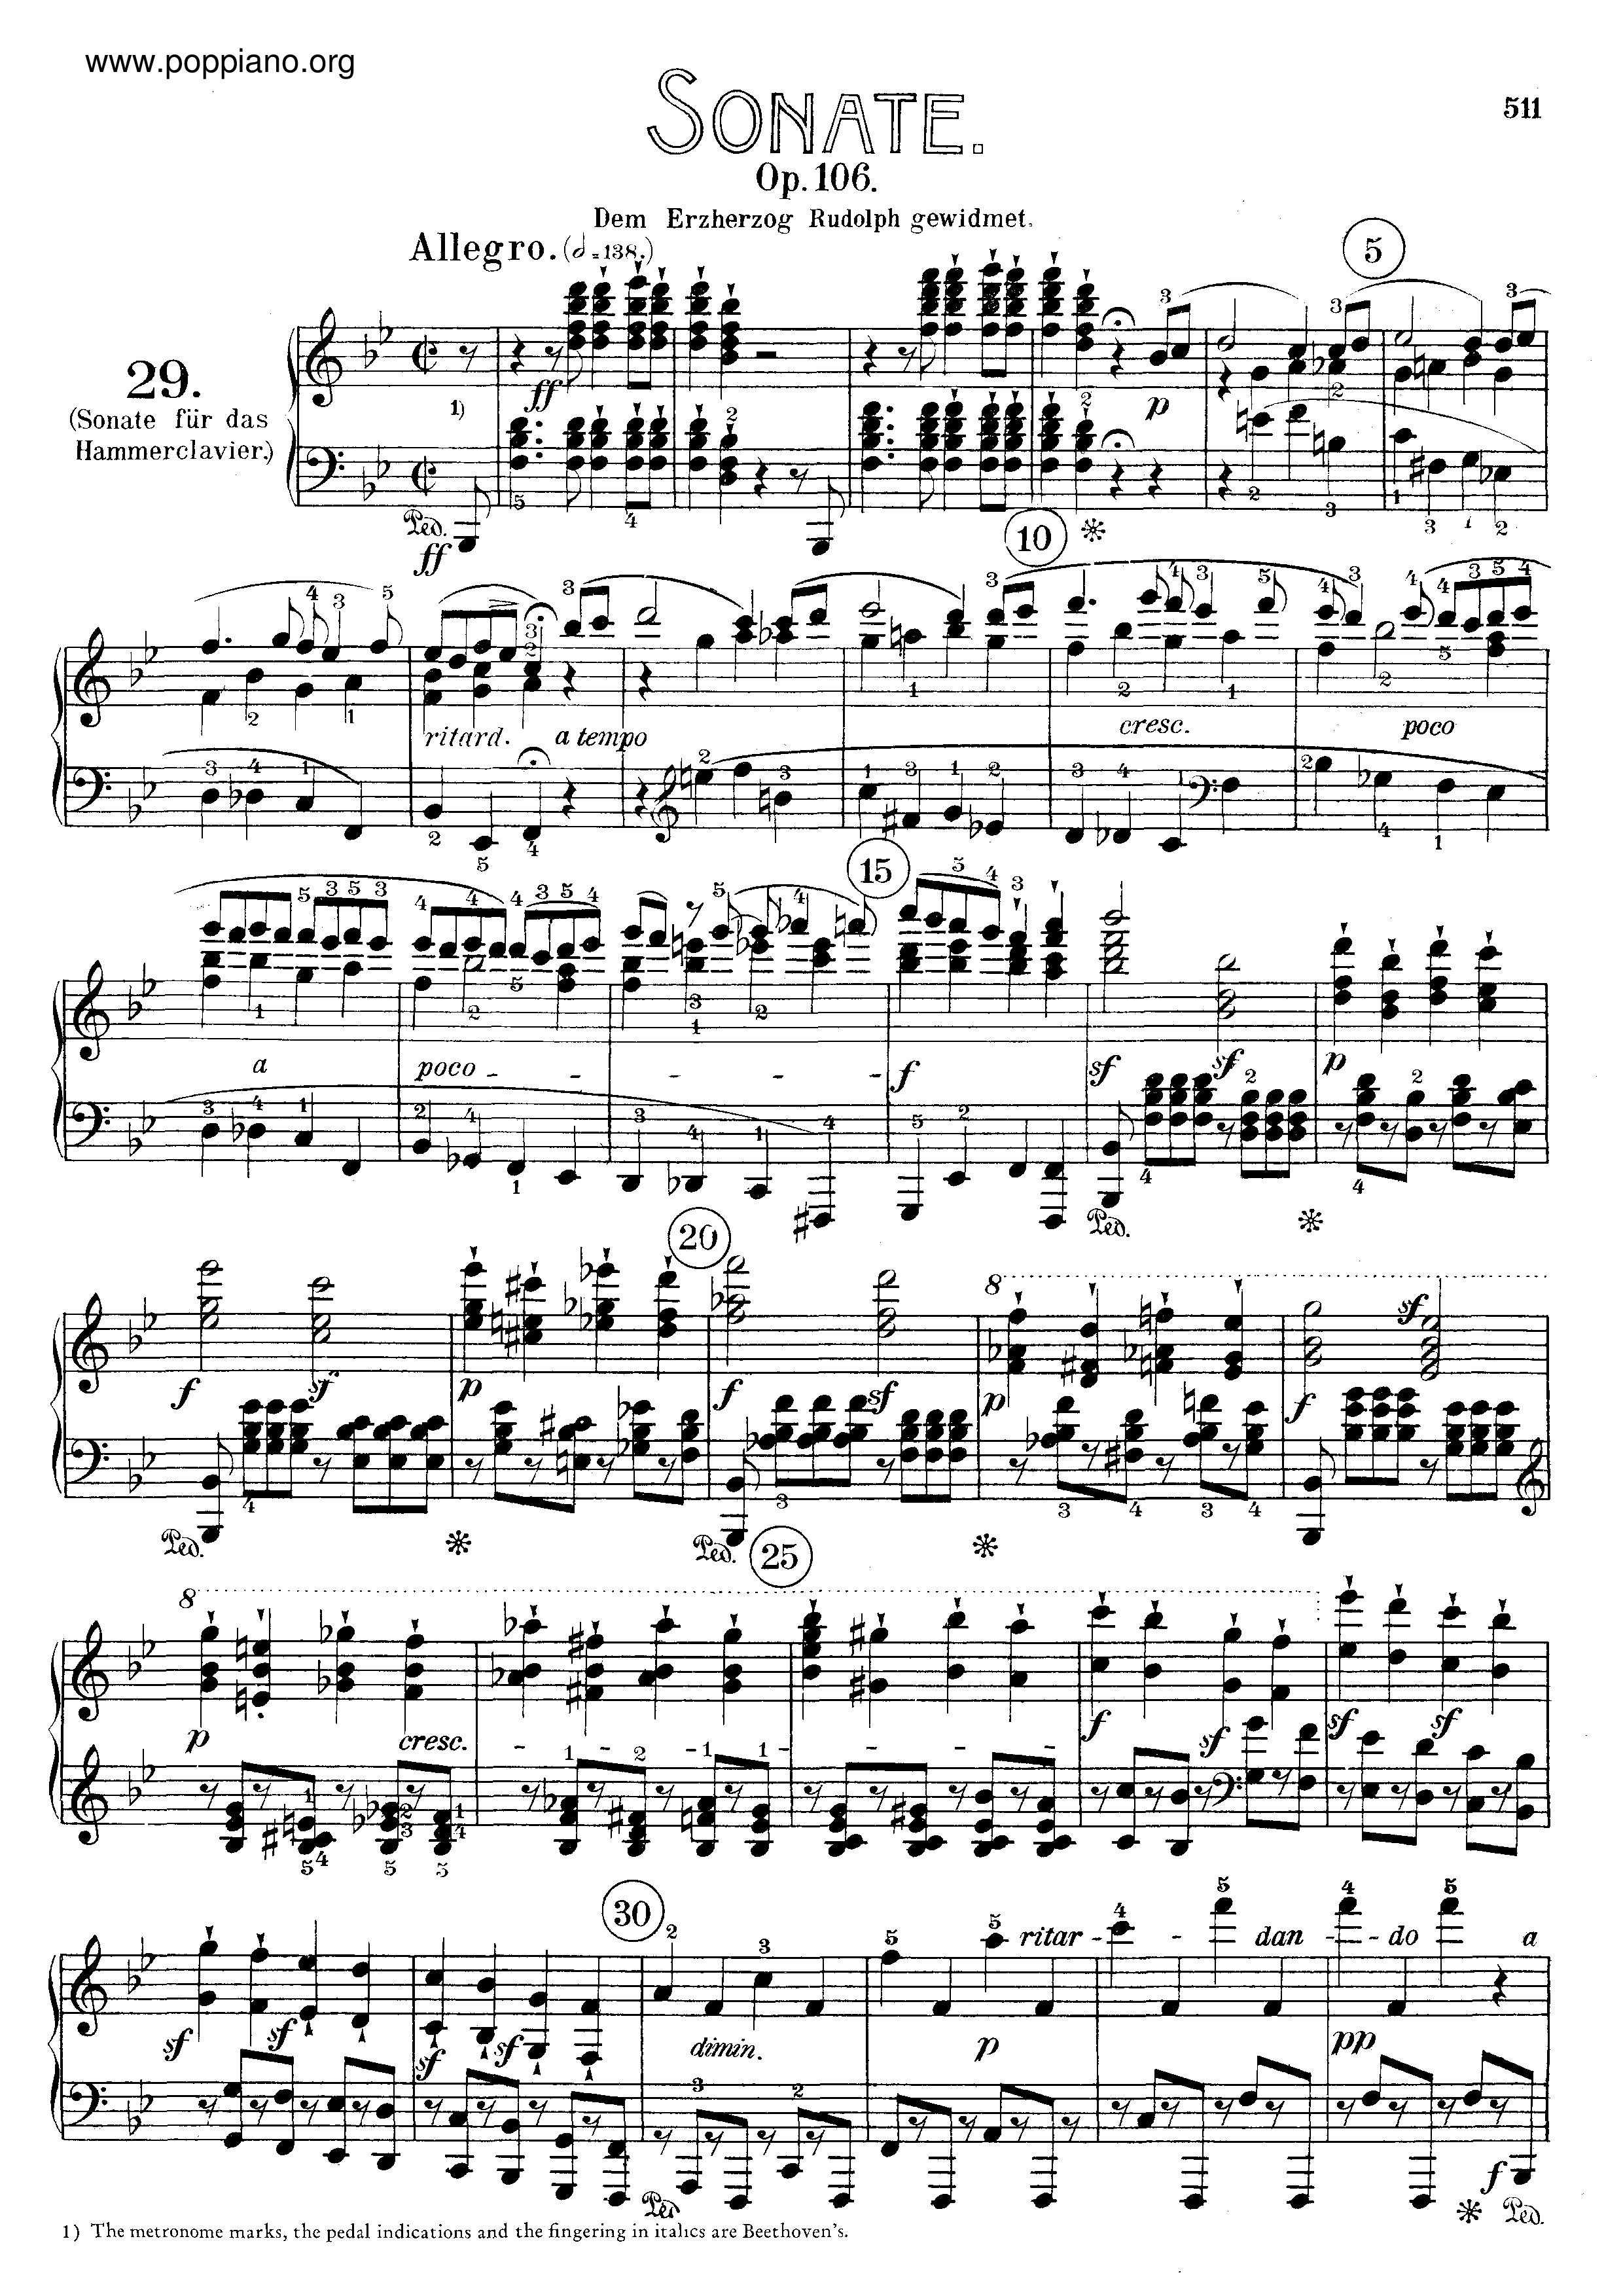 Sonata No. 29 in B-flat major Score